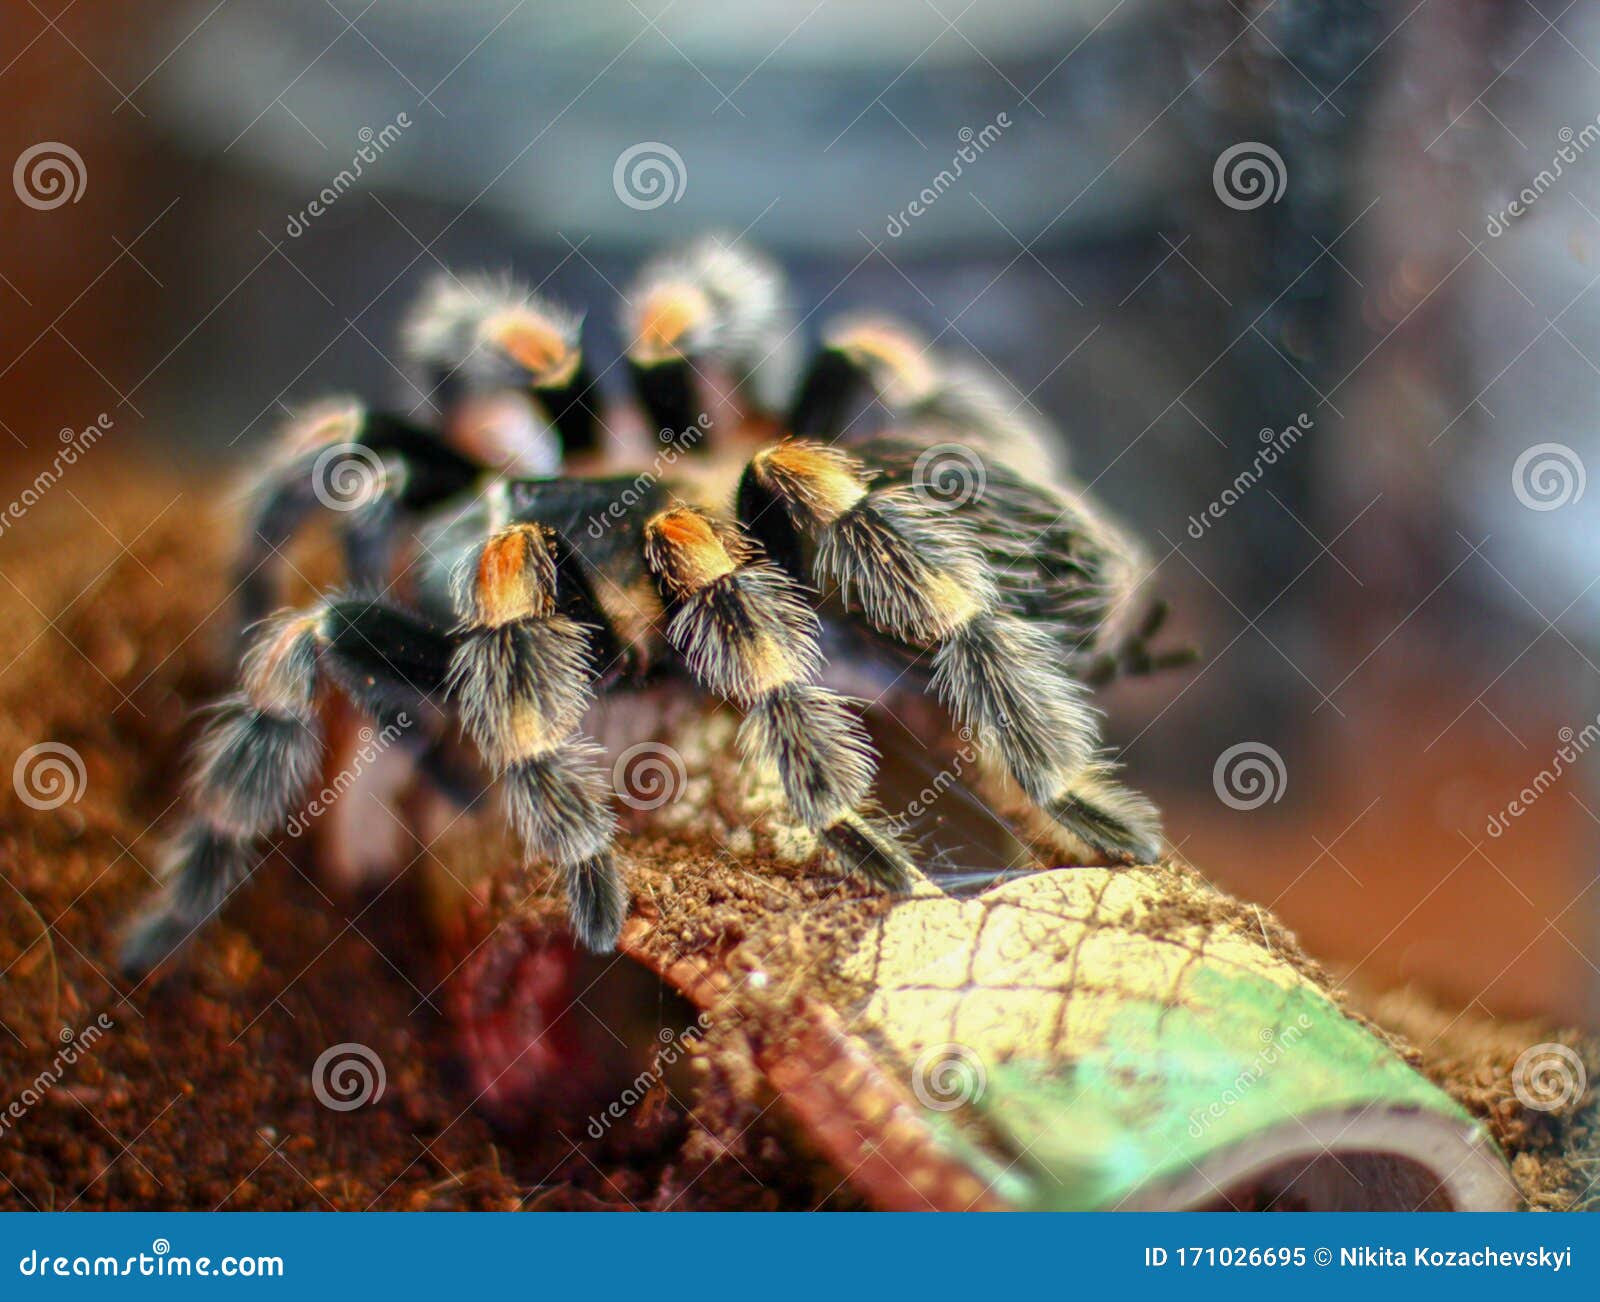 Big Scary Spider Crawls on the Ground Stock Image - Image of animals ...